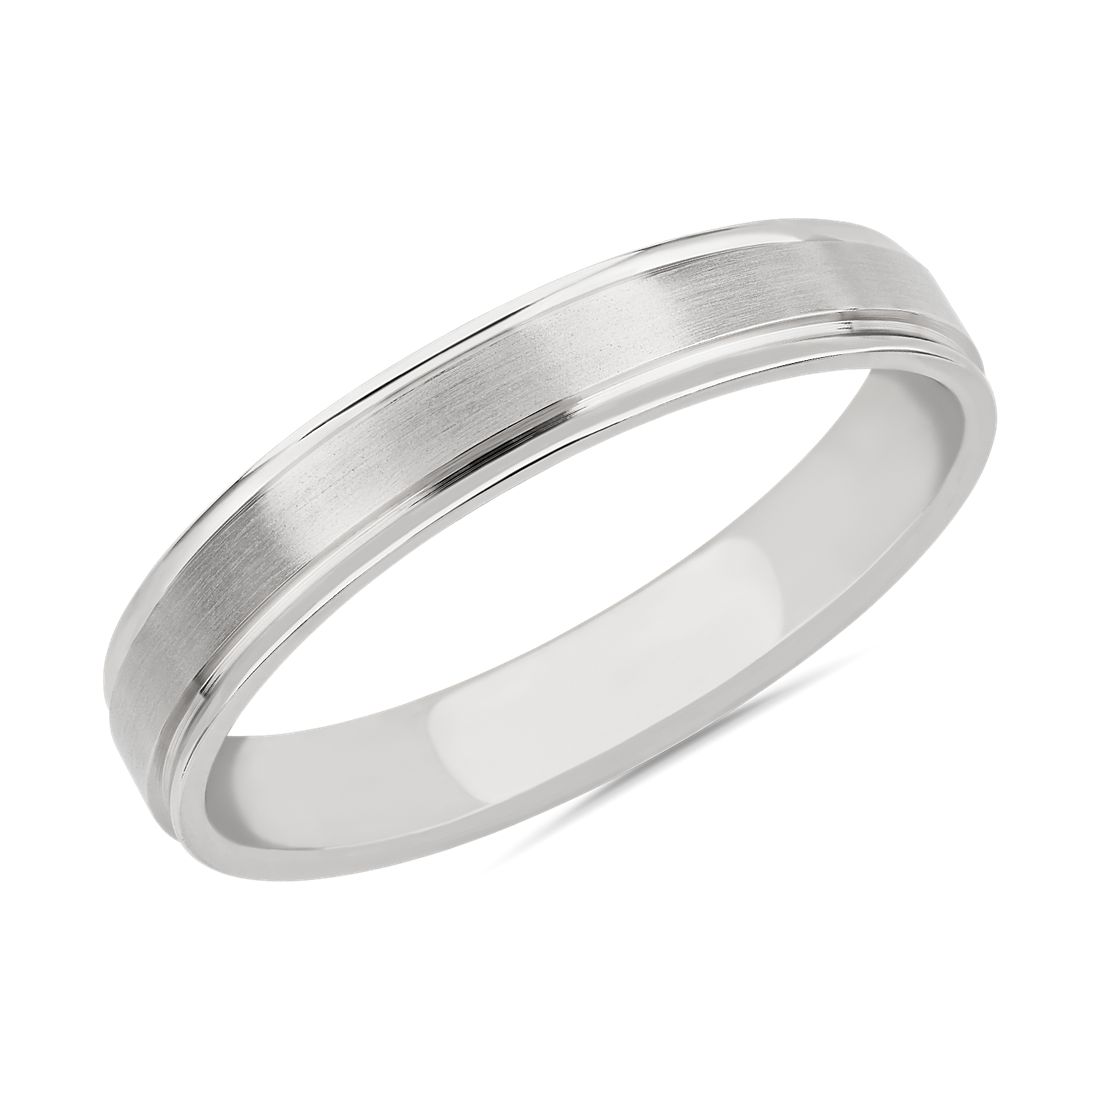 Brushed Inlay Wedding Ring in 14k White Gold (4 mm)